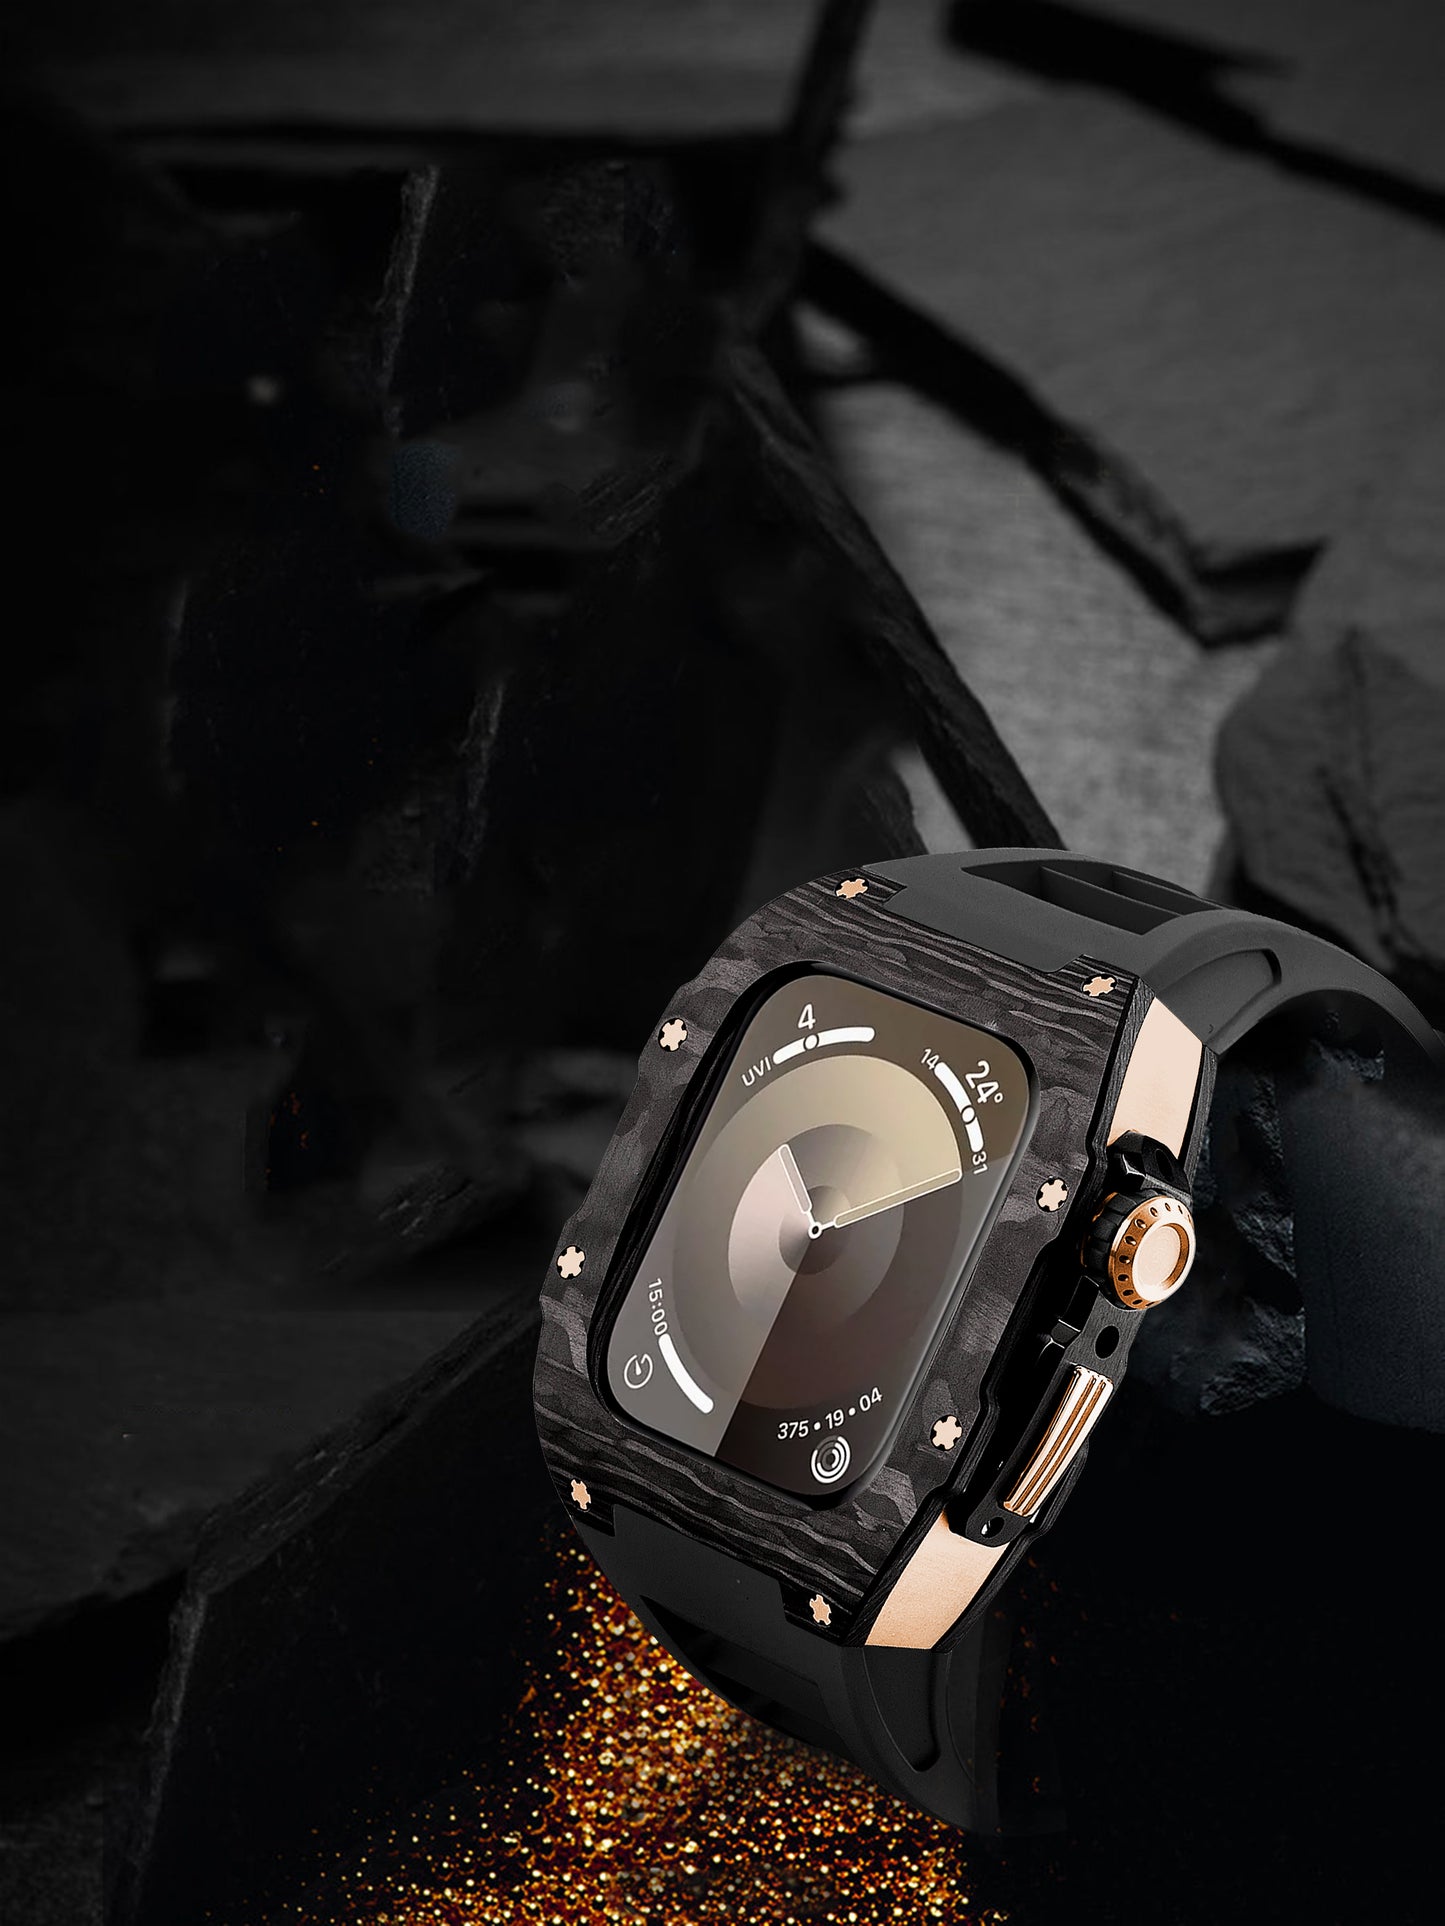 Apple Watch Case 44mm - Carbon Fiber Ti Black Case + Green Fluoro Strap (8 Screws)